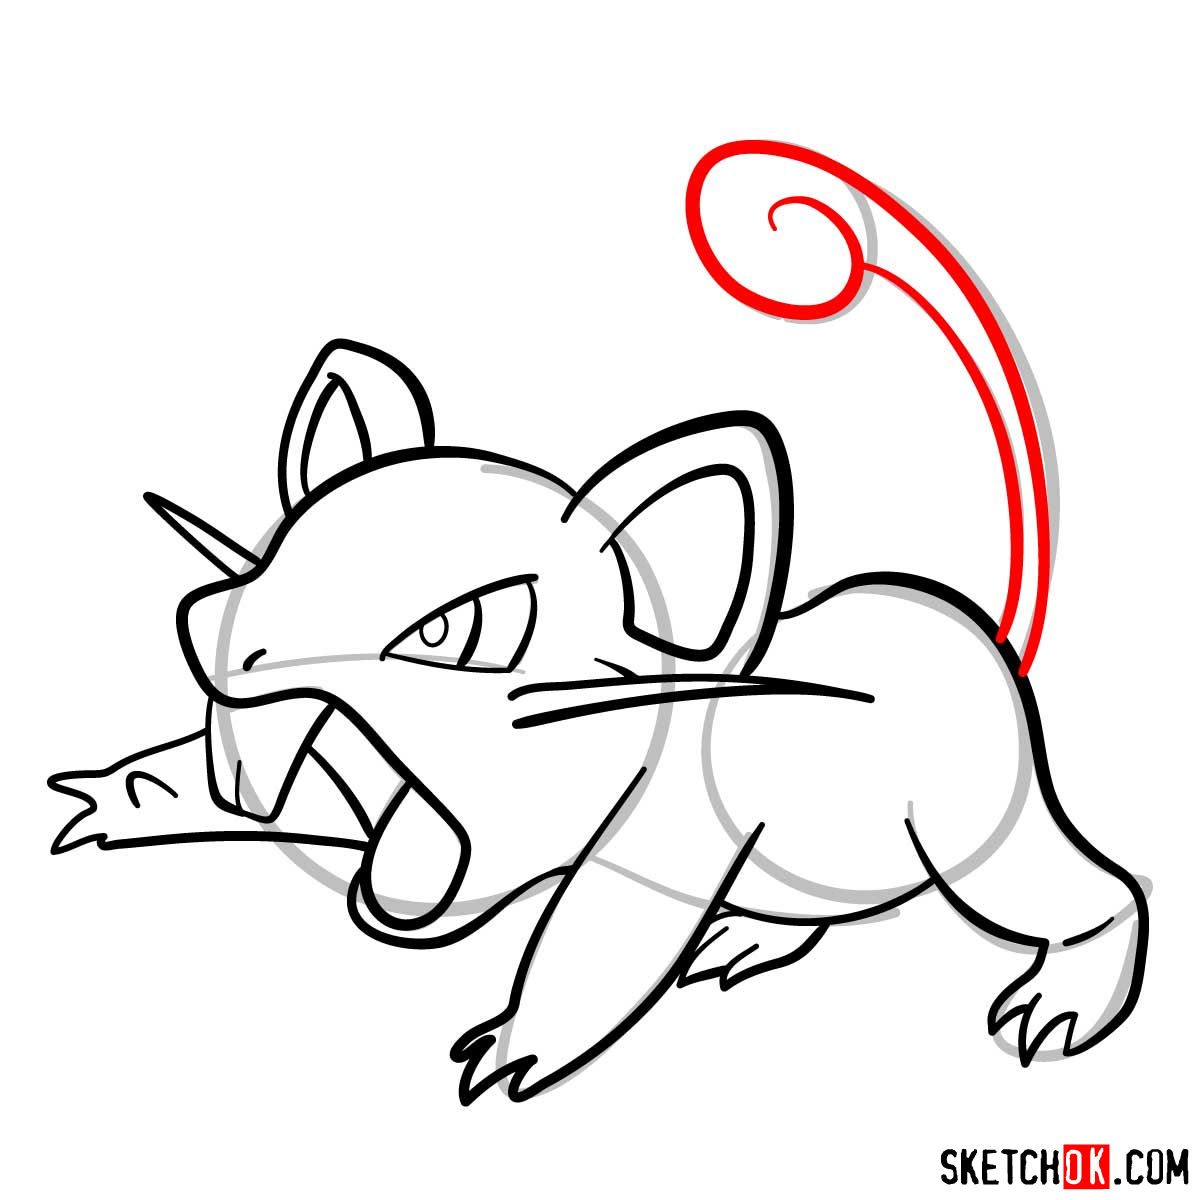 How to draw Rattata Pokemon - step 09